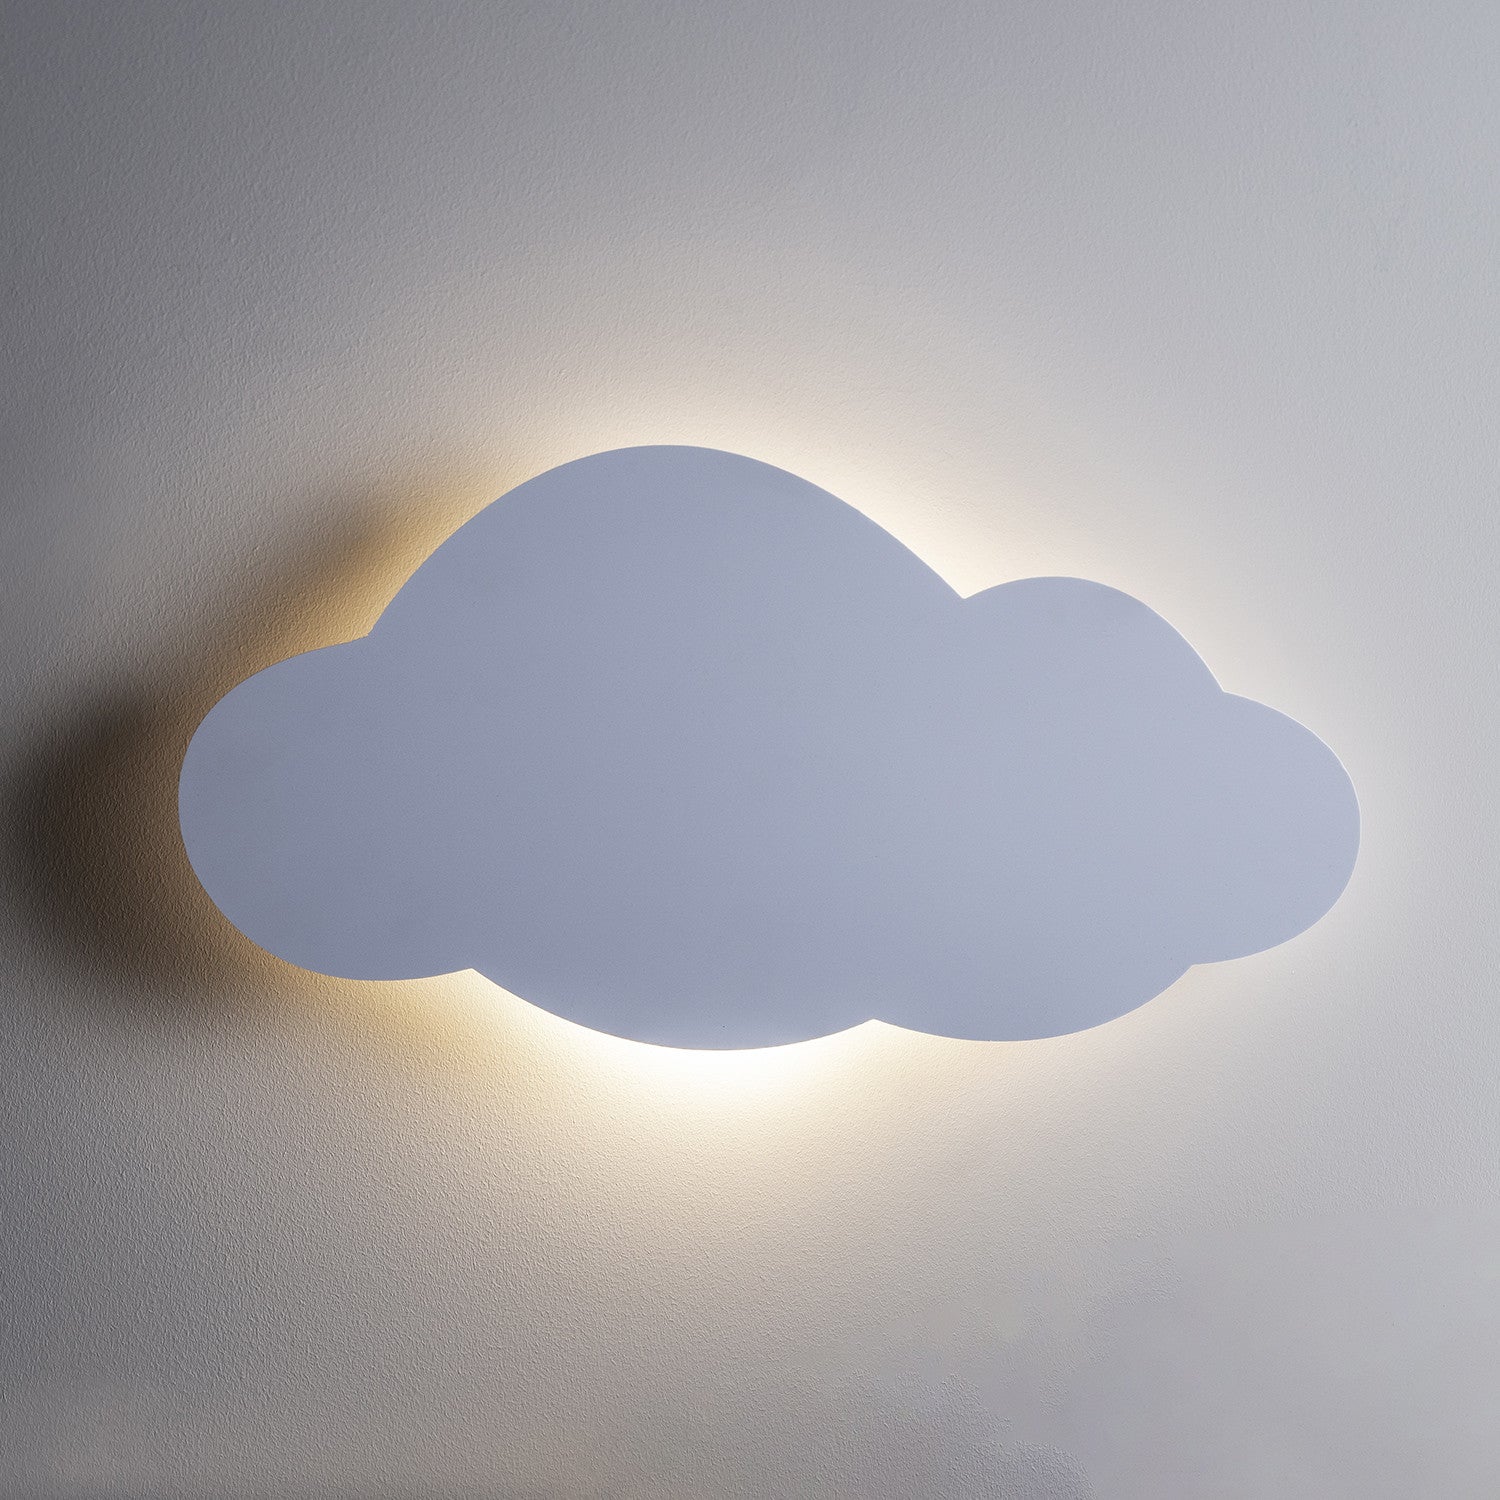 Cloud Silhouette Battery Night Light | Lights4fun.co.uk